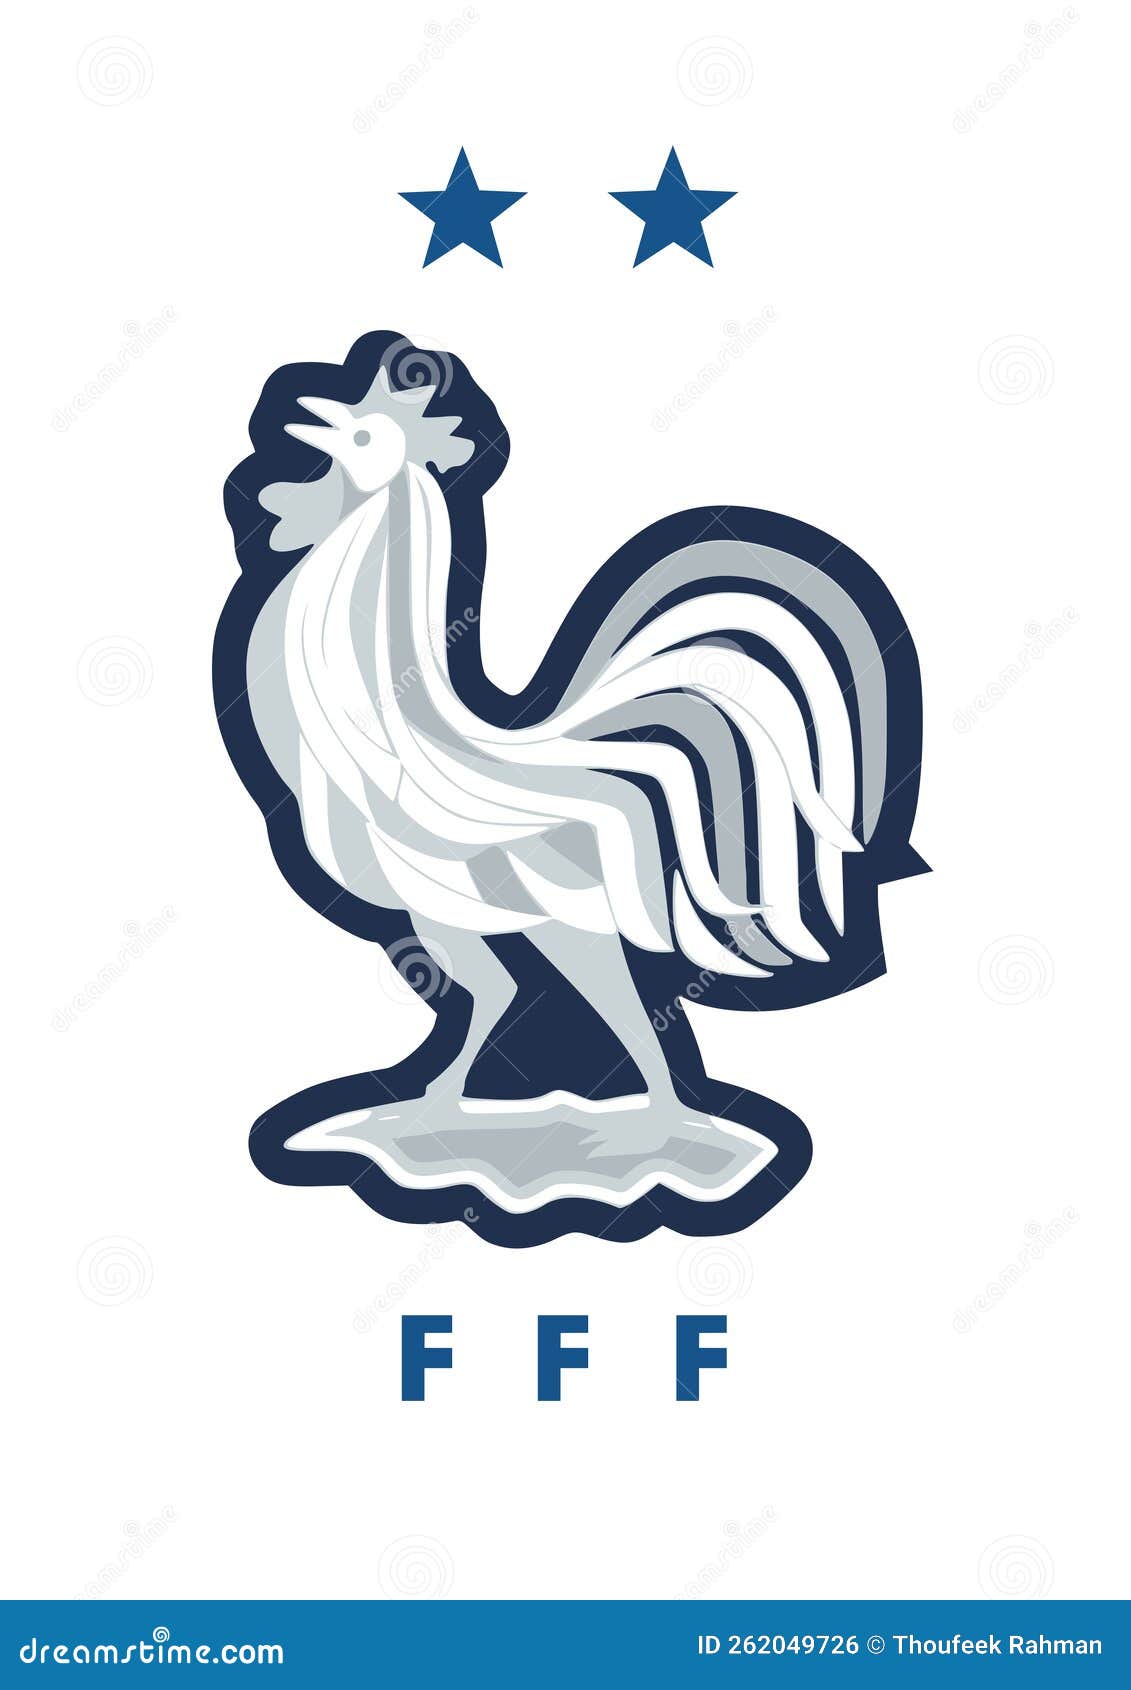 FIFA World Cup France'98 Football Soccer Official Logo Pin Badge | eBay